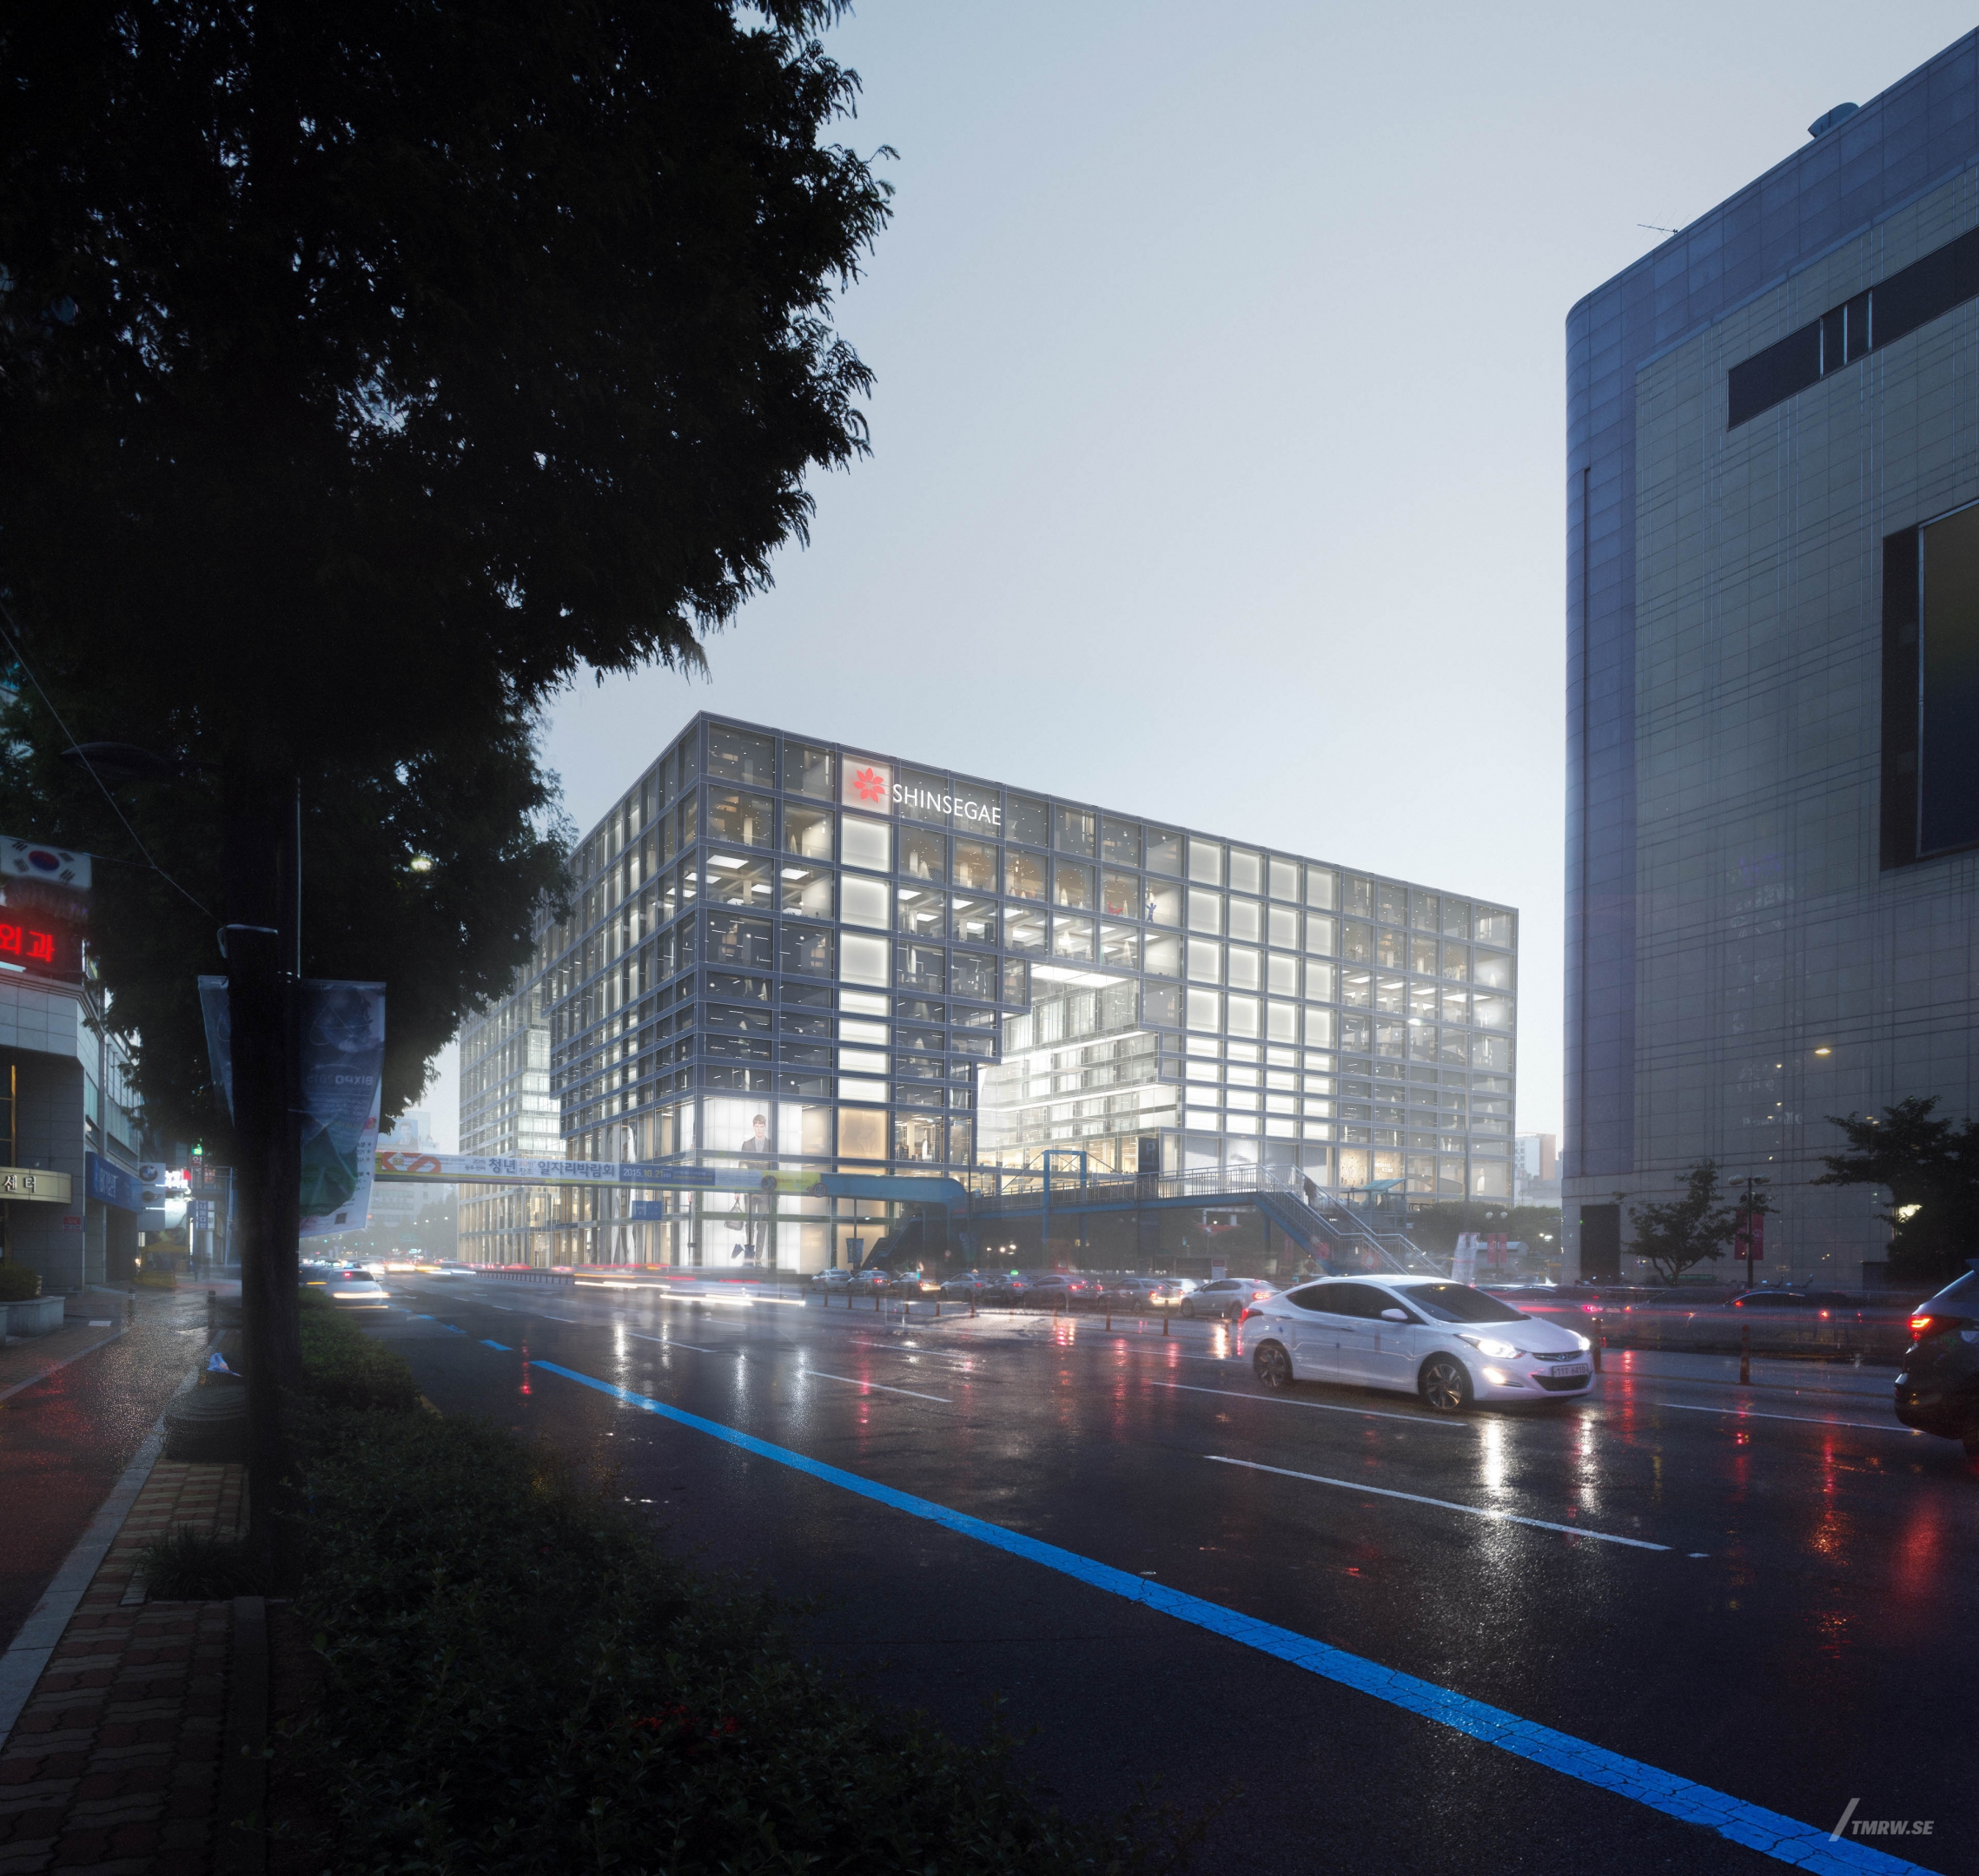 Architectural visualization of Shinsegae for MVRDV, street view of Shinsegae store in the dusk and rain